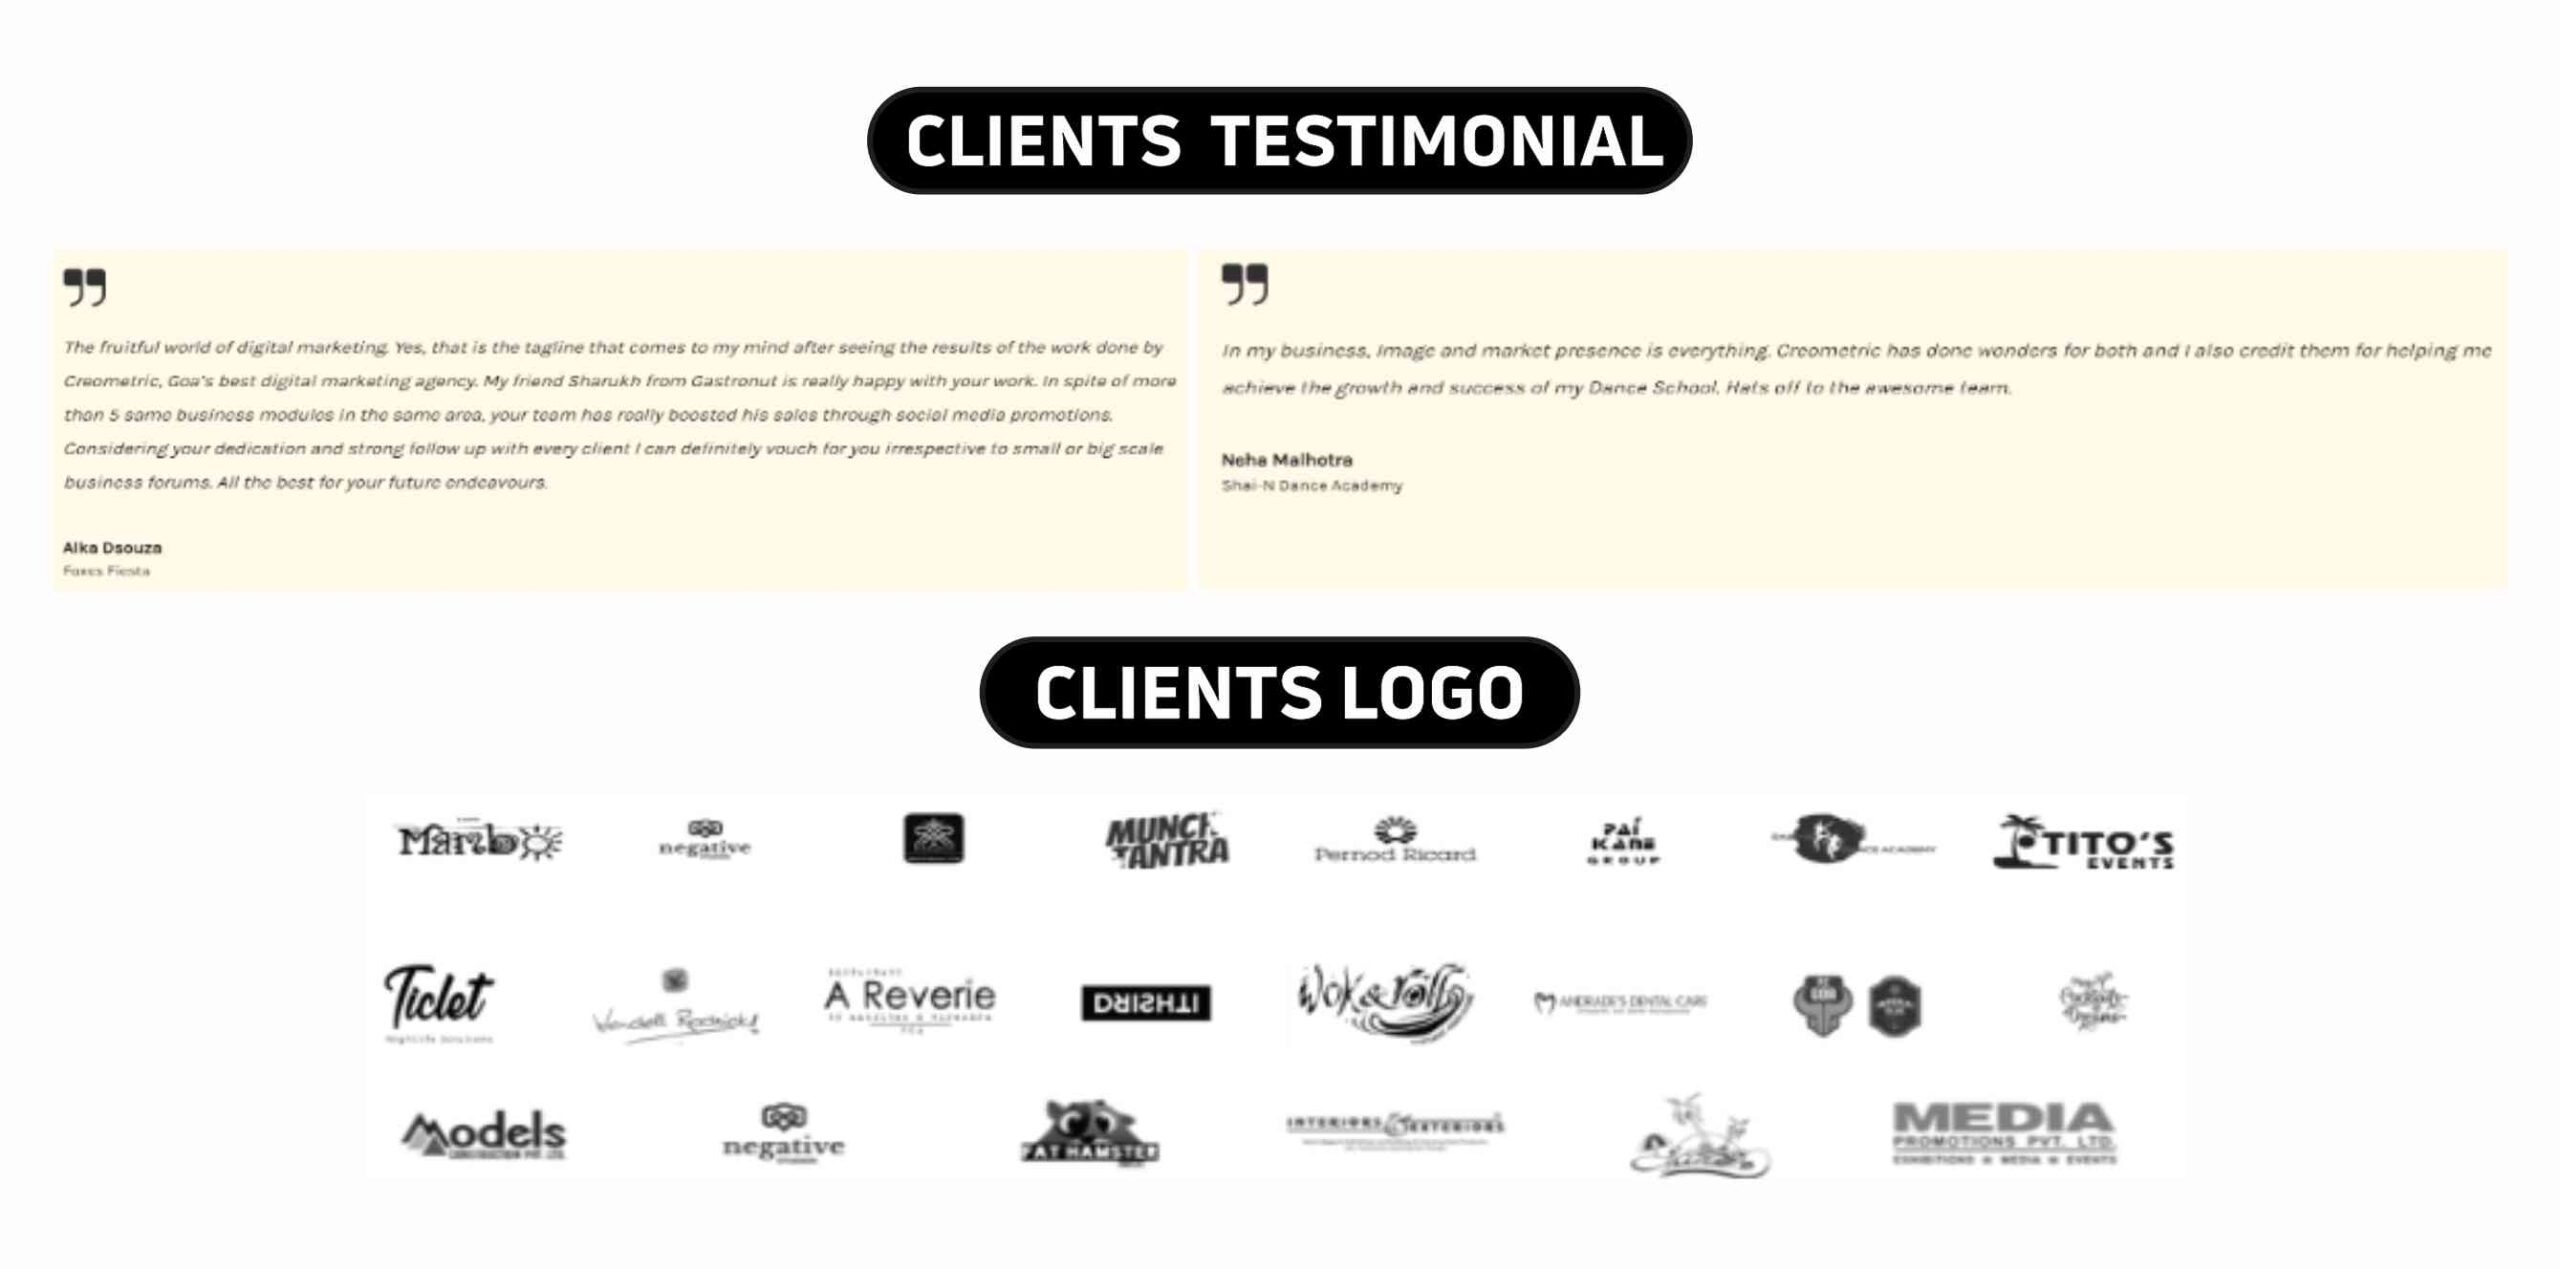 Creo Metric Client Testimonial & Clients logos